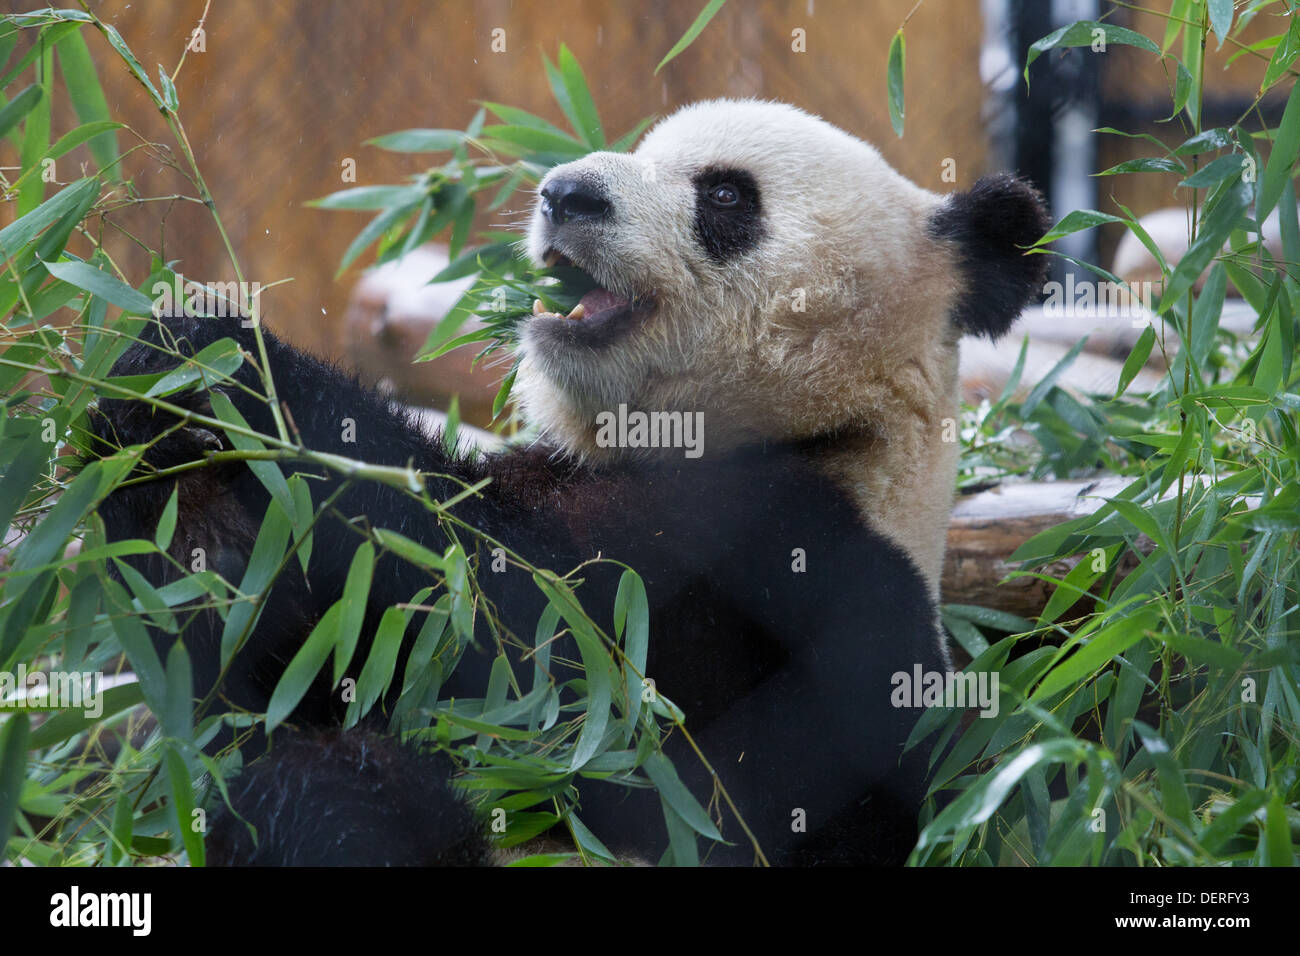 Grand panda eating bamboo toronto zoo 'er shun' Banque D'Images